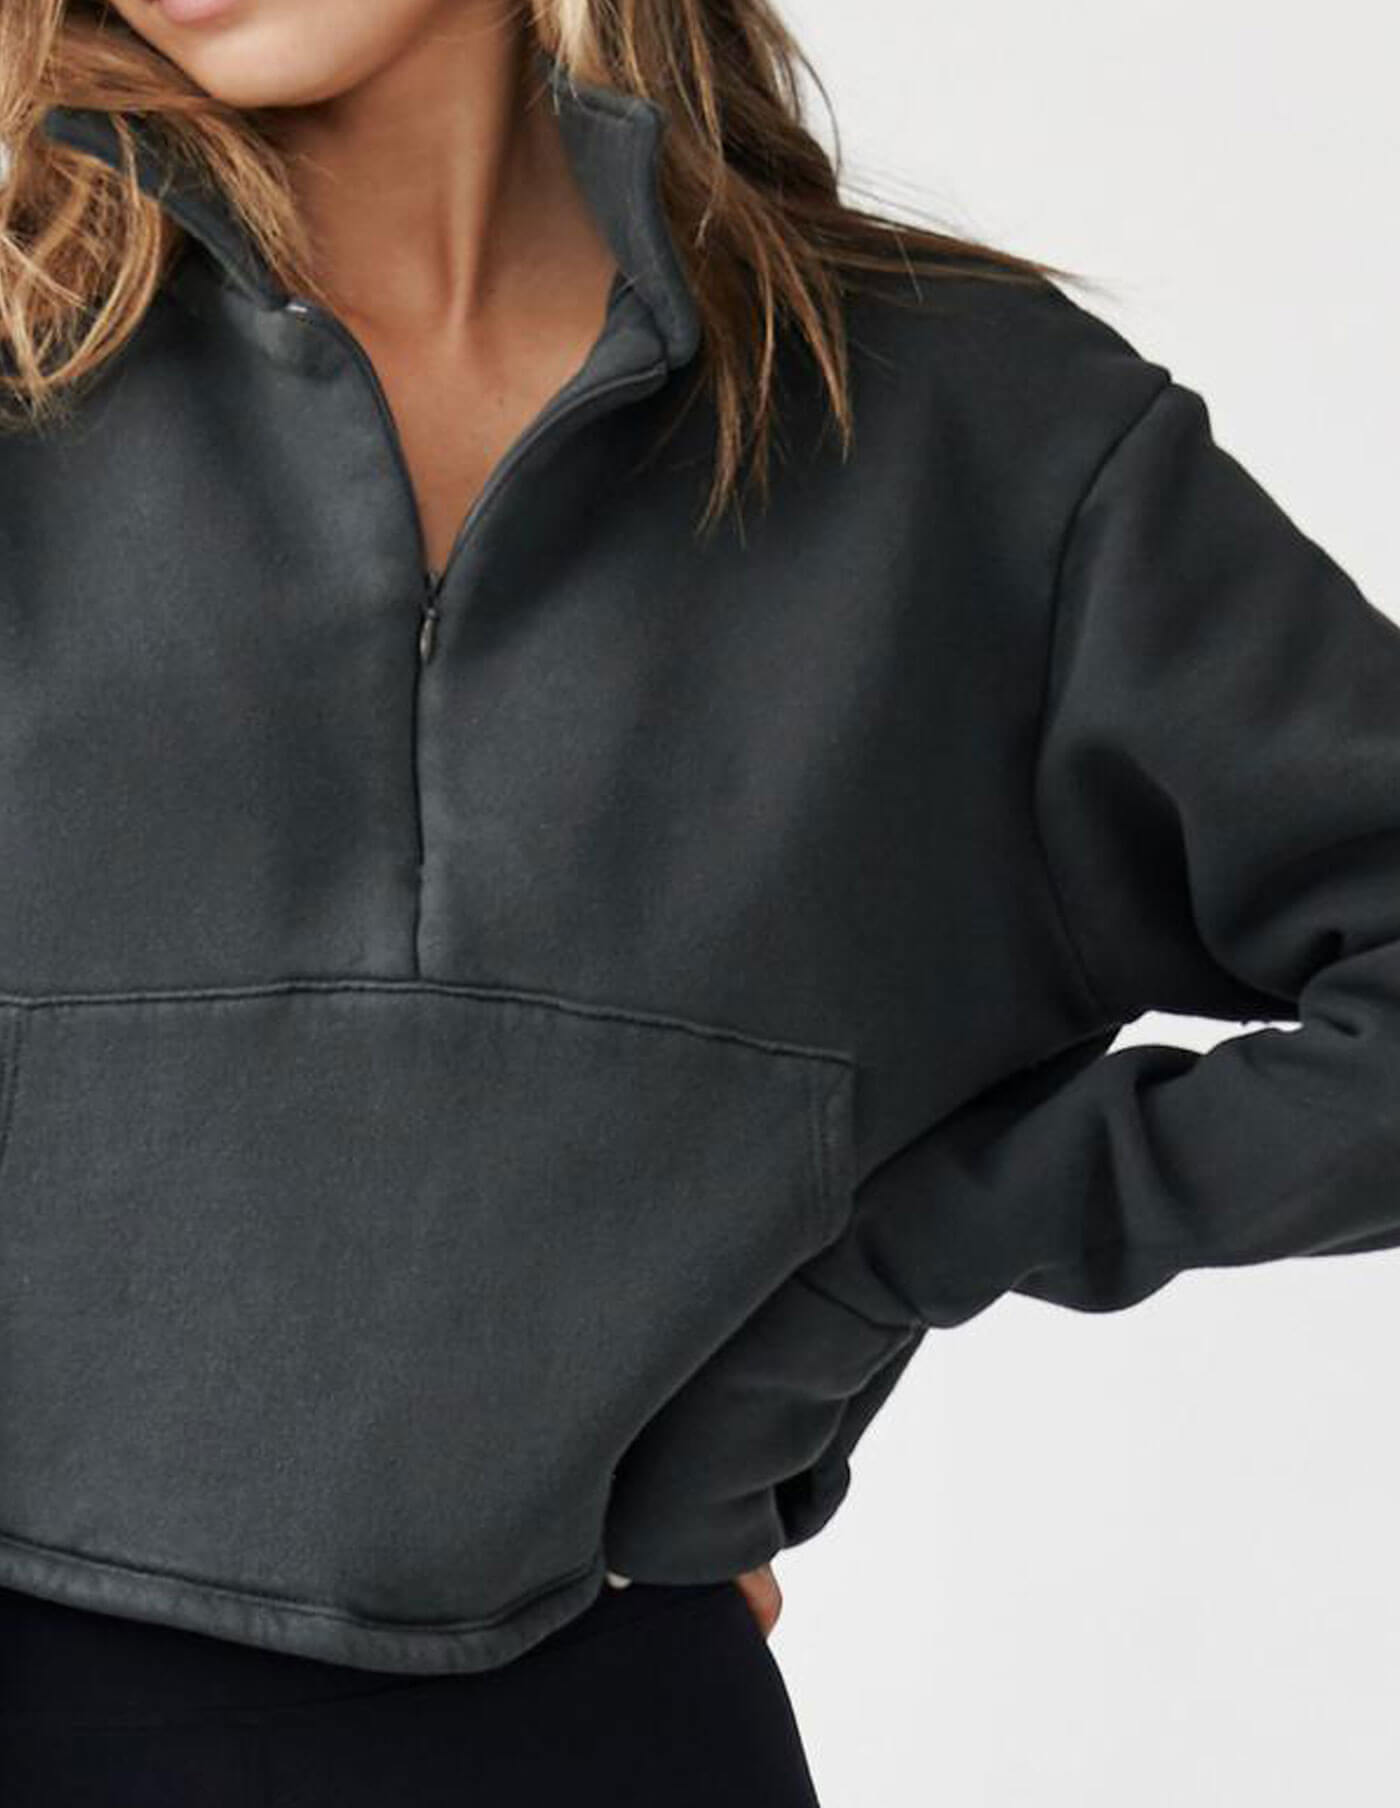 Joah Brown Aspen Half Zip Sweatshirt In Charcoal at Storm Fashion